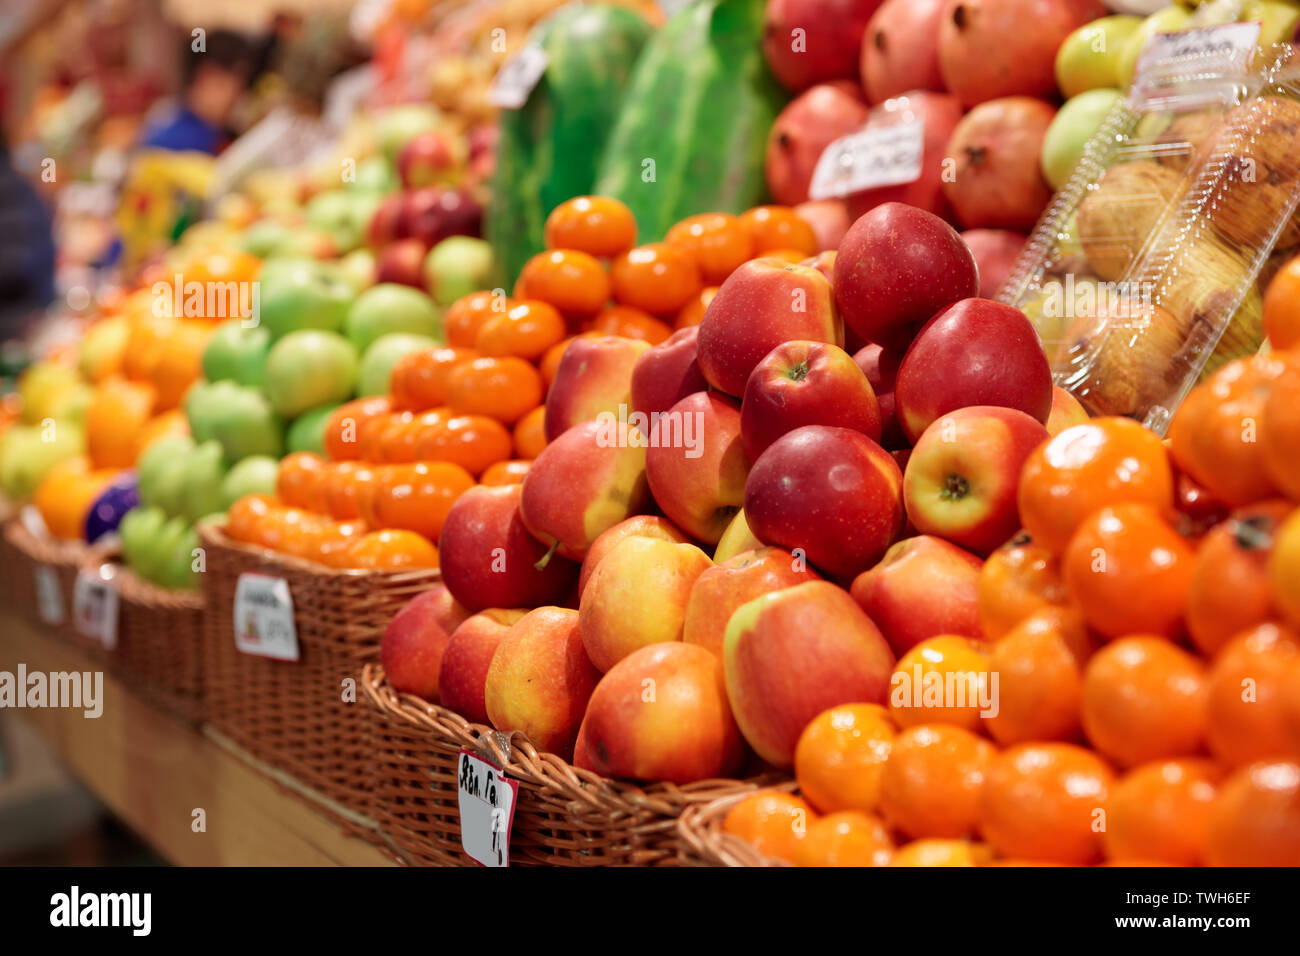 Fruits on a farm market shelf Stock Photo